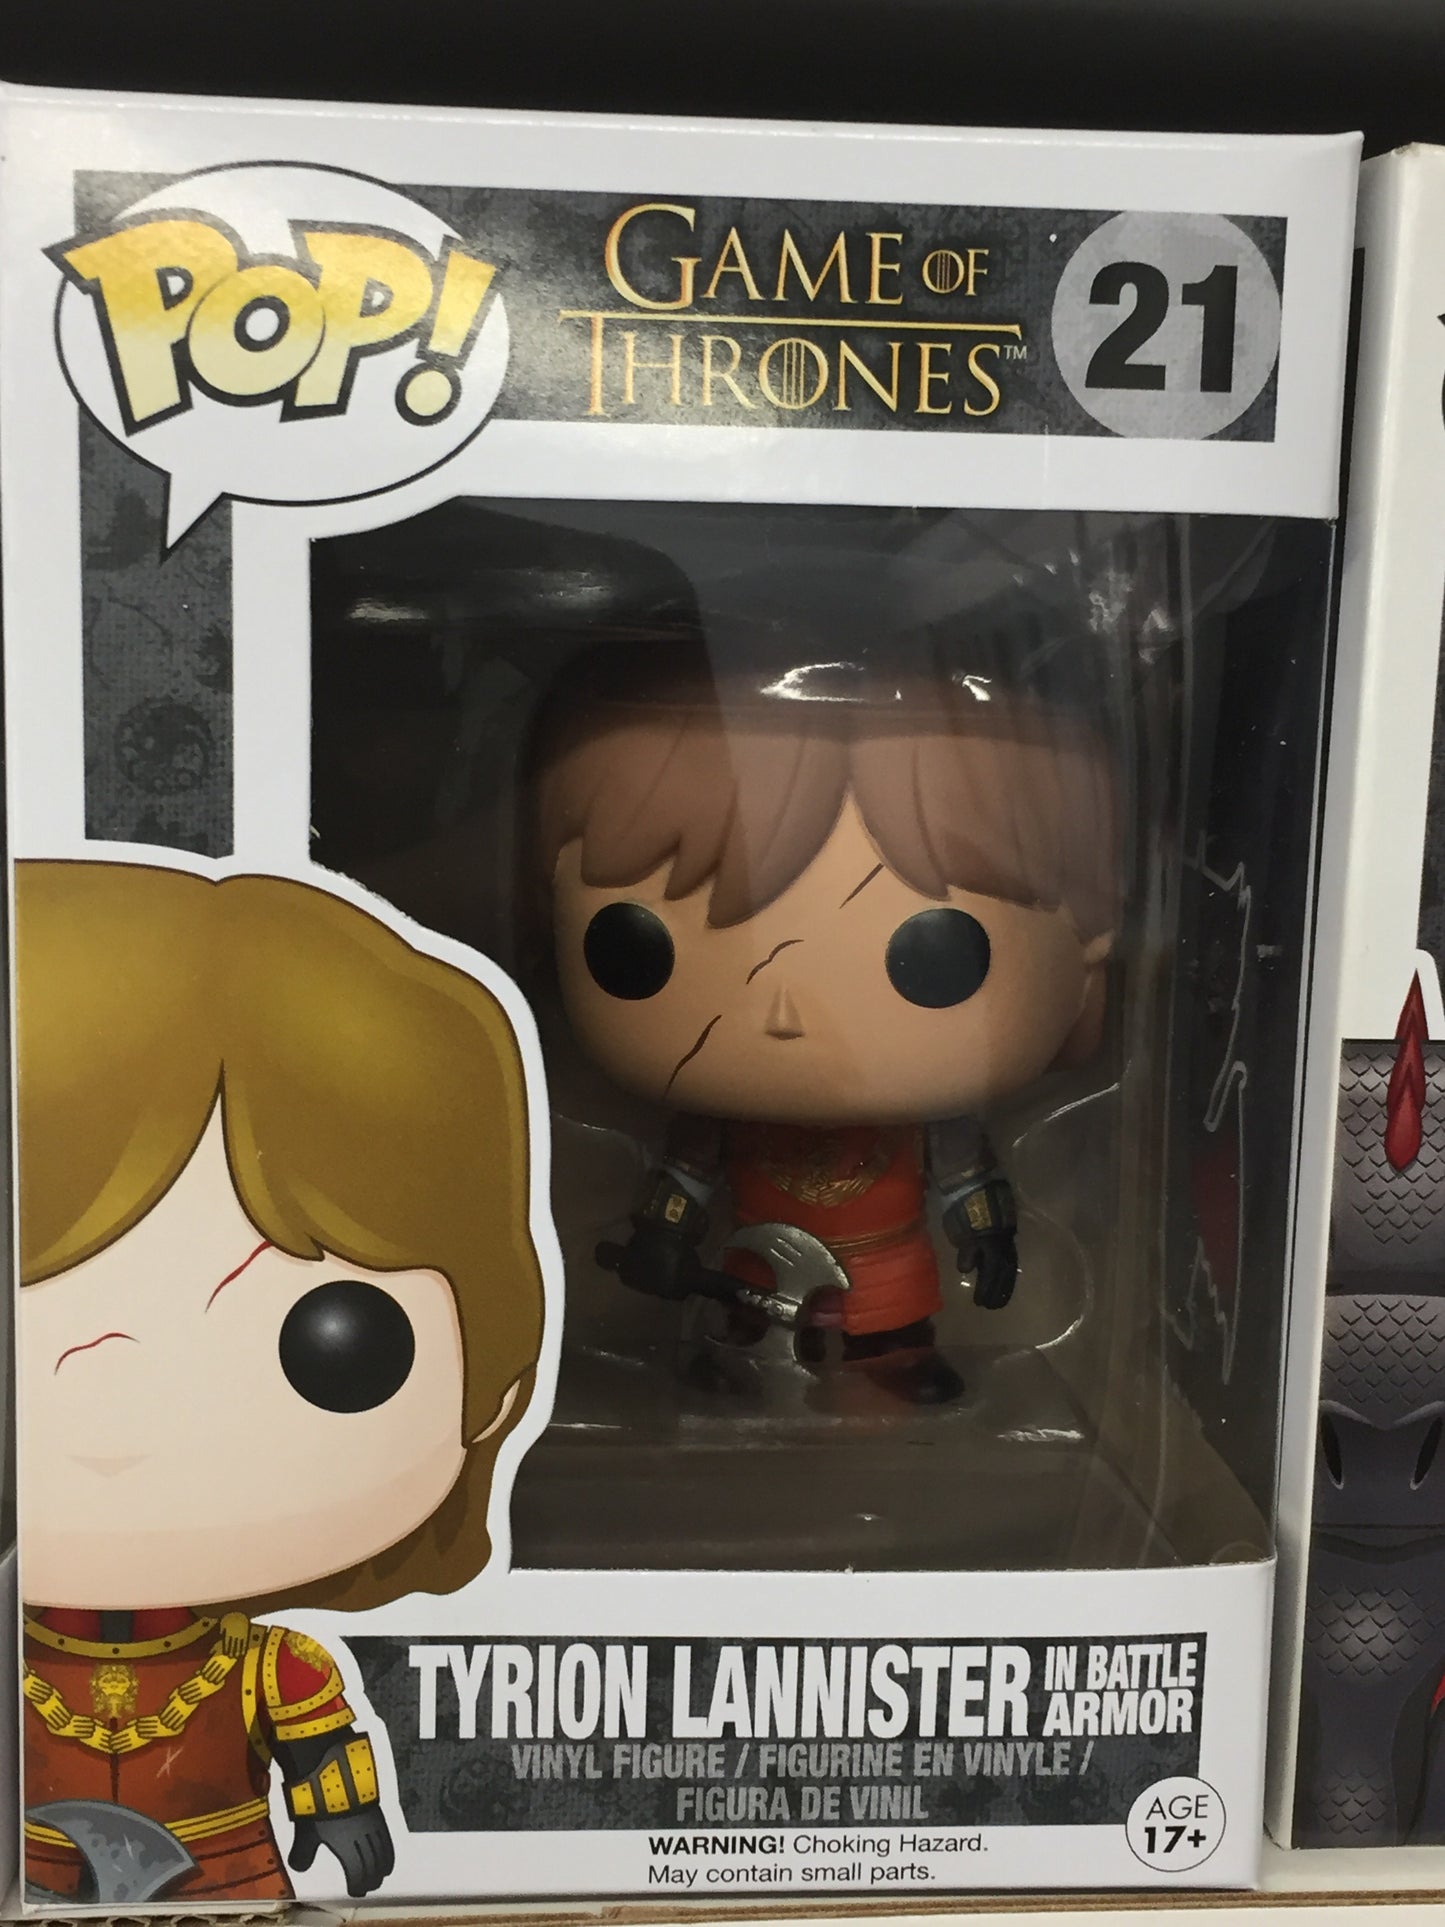 GOT Game of Thrones Tyrion Lannister battle armor Funko Pop vinyl Figure